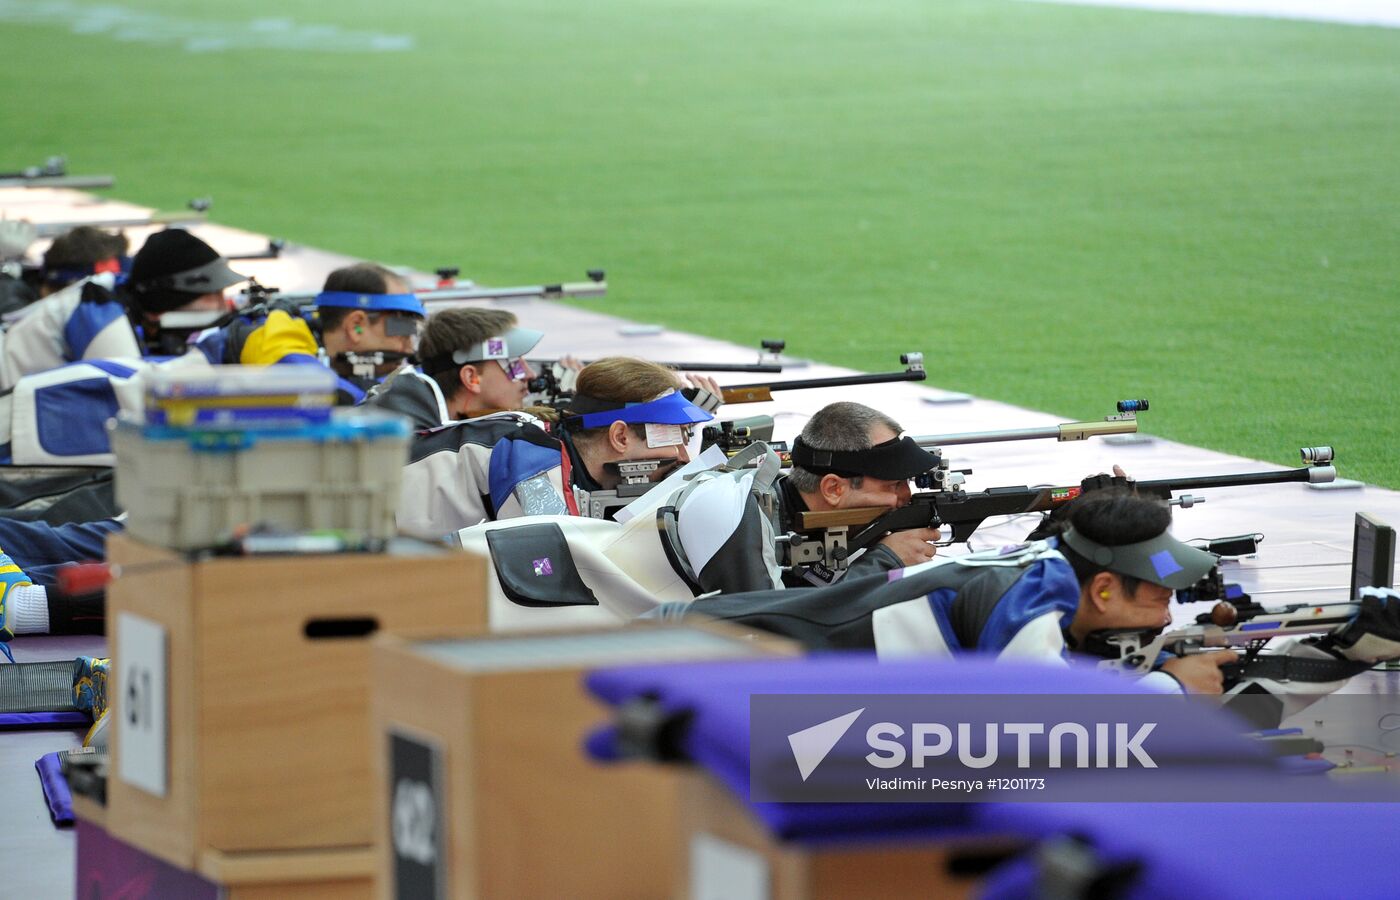 2012 Olympics. Shooting. Men's rifle event